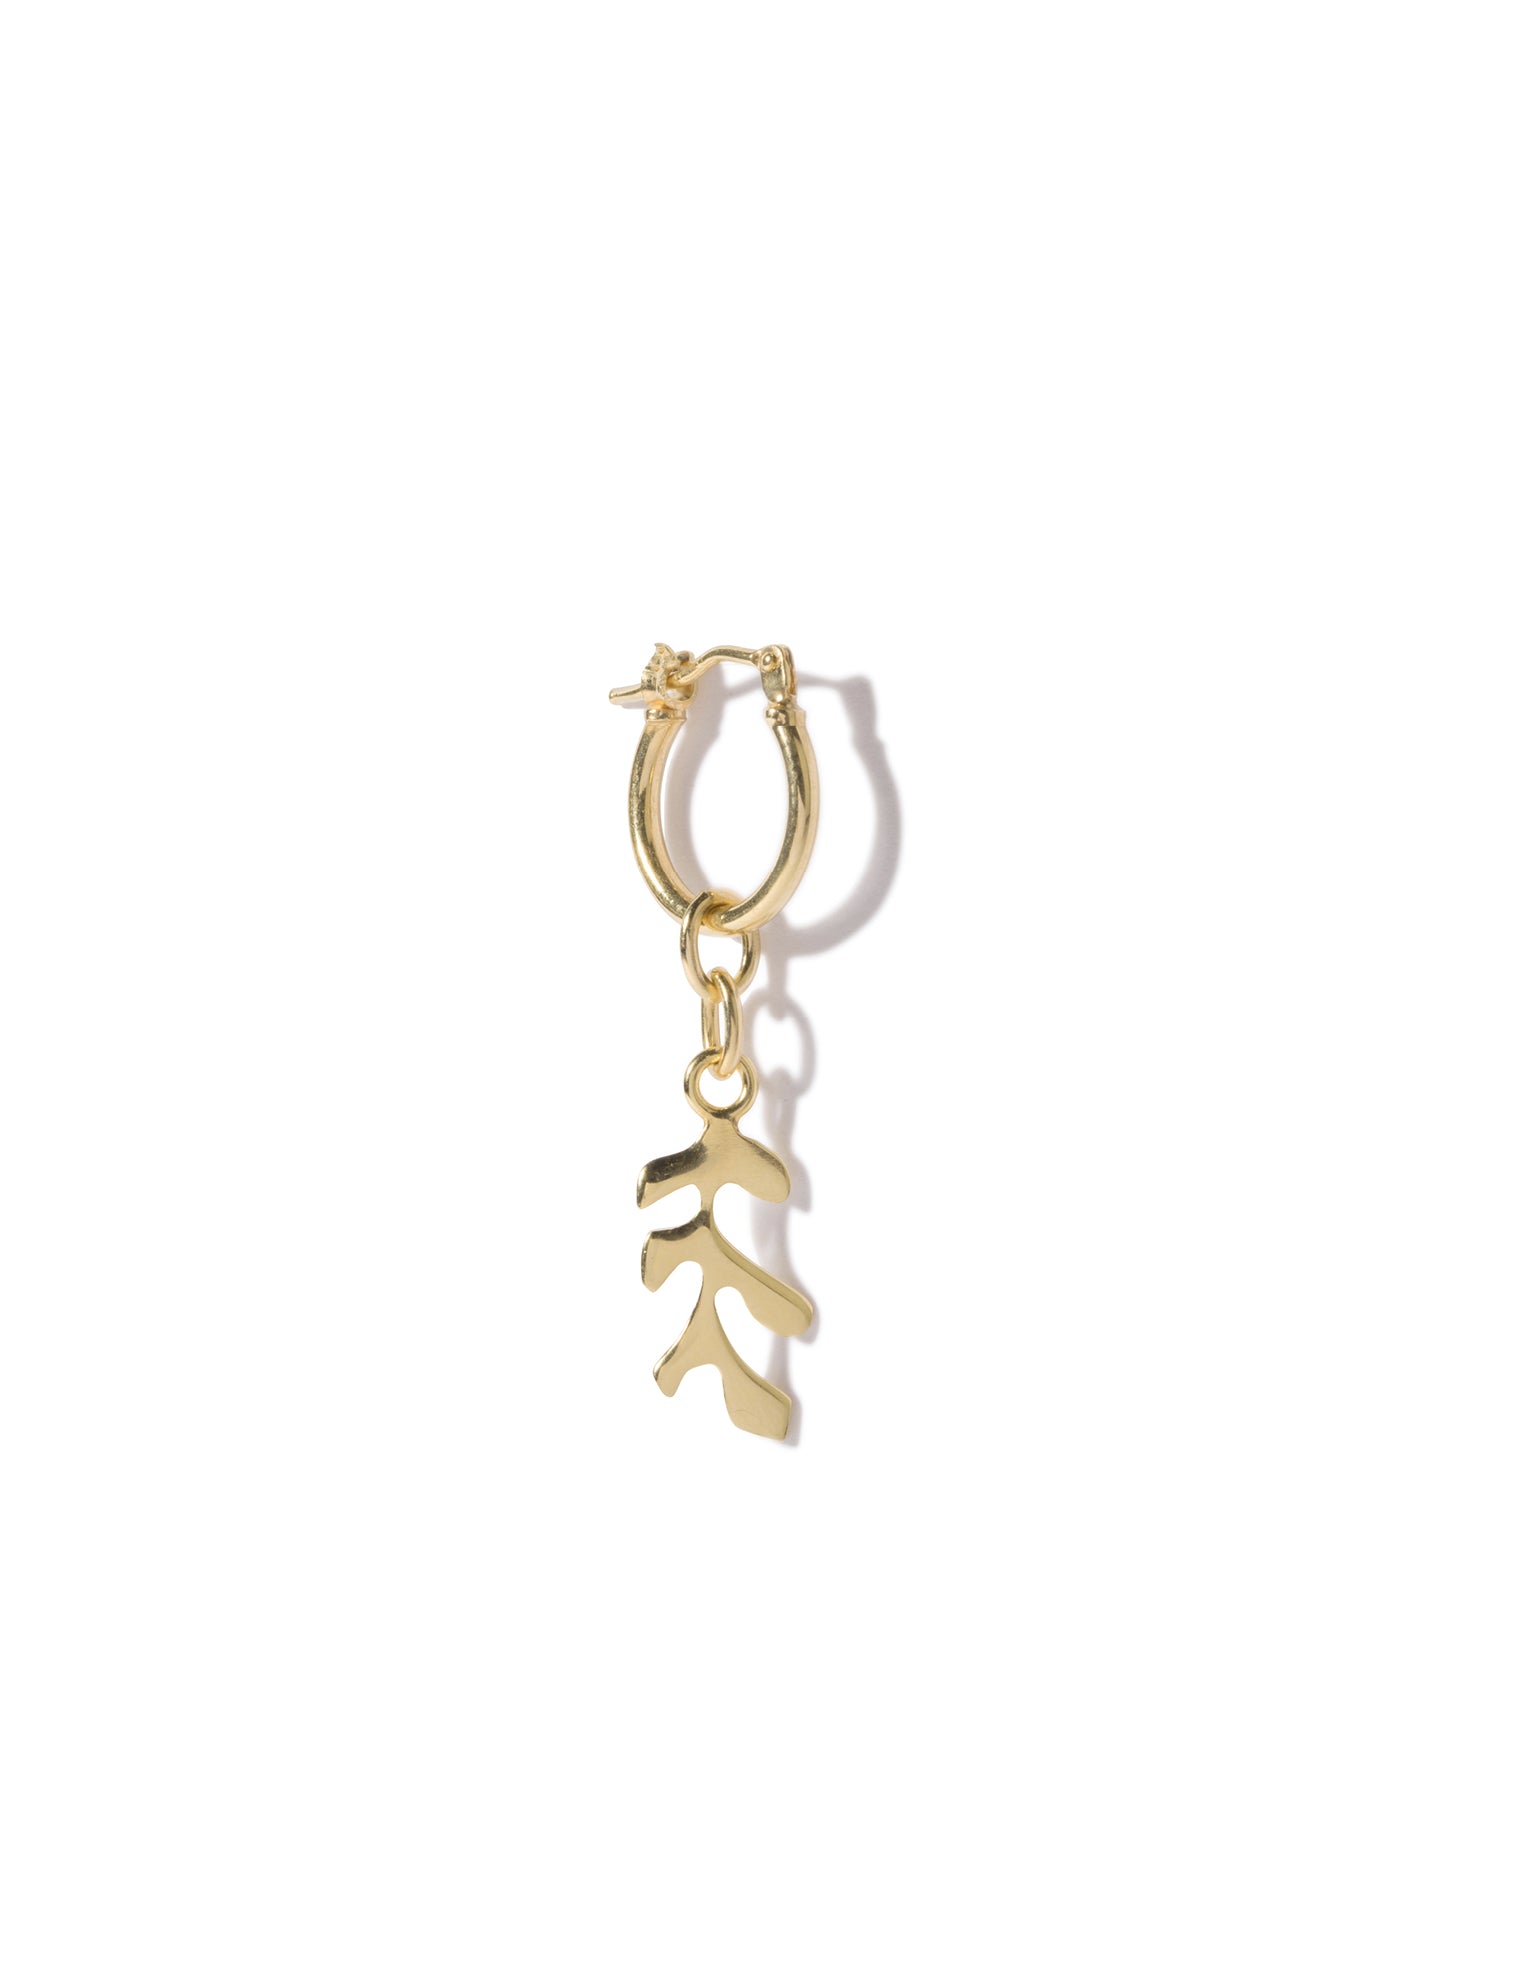 Matisse Leaf Earring Gold Vermeil - Overload Studios